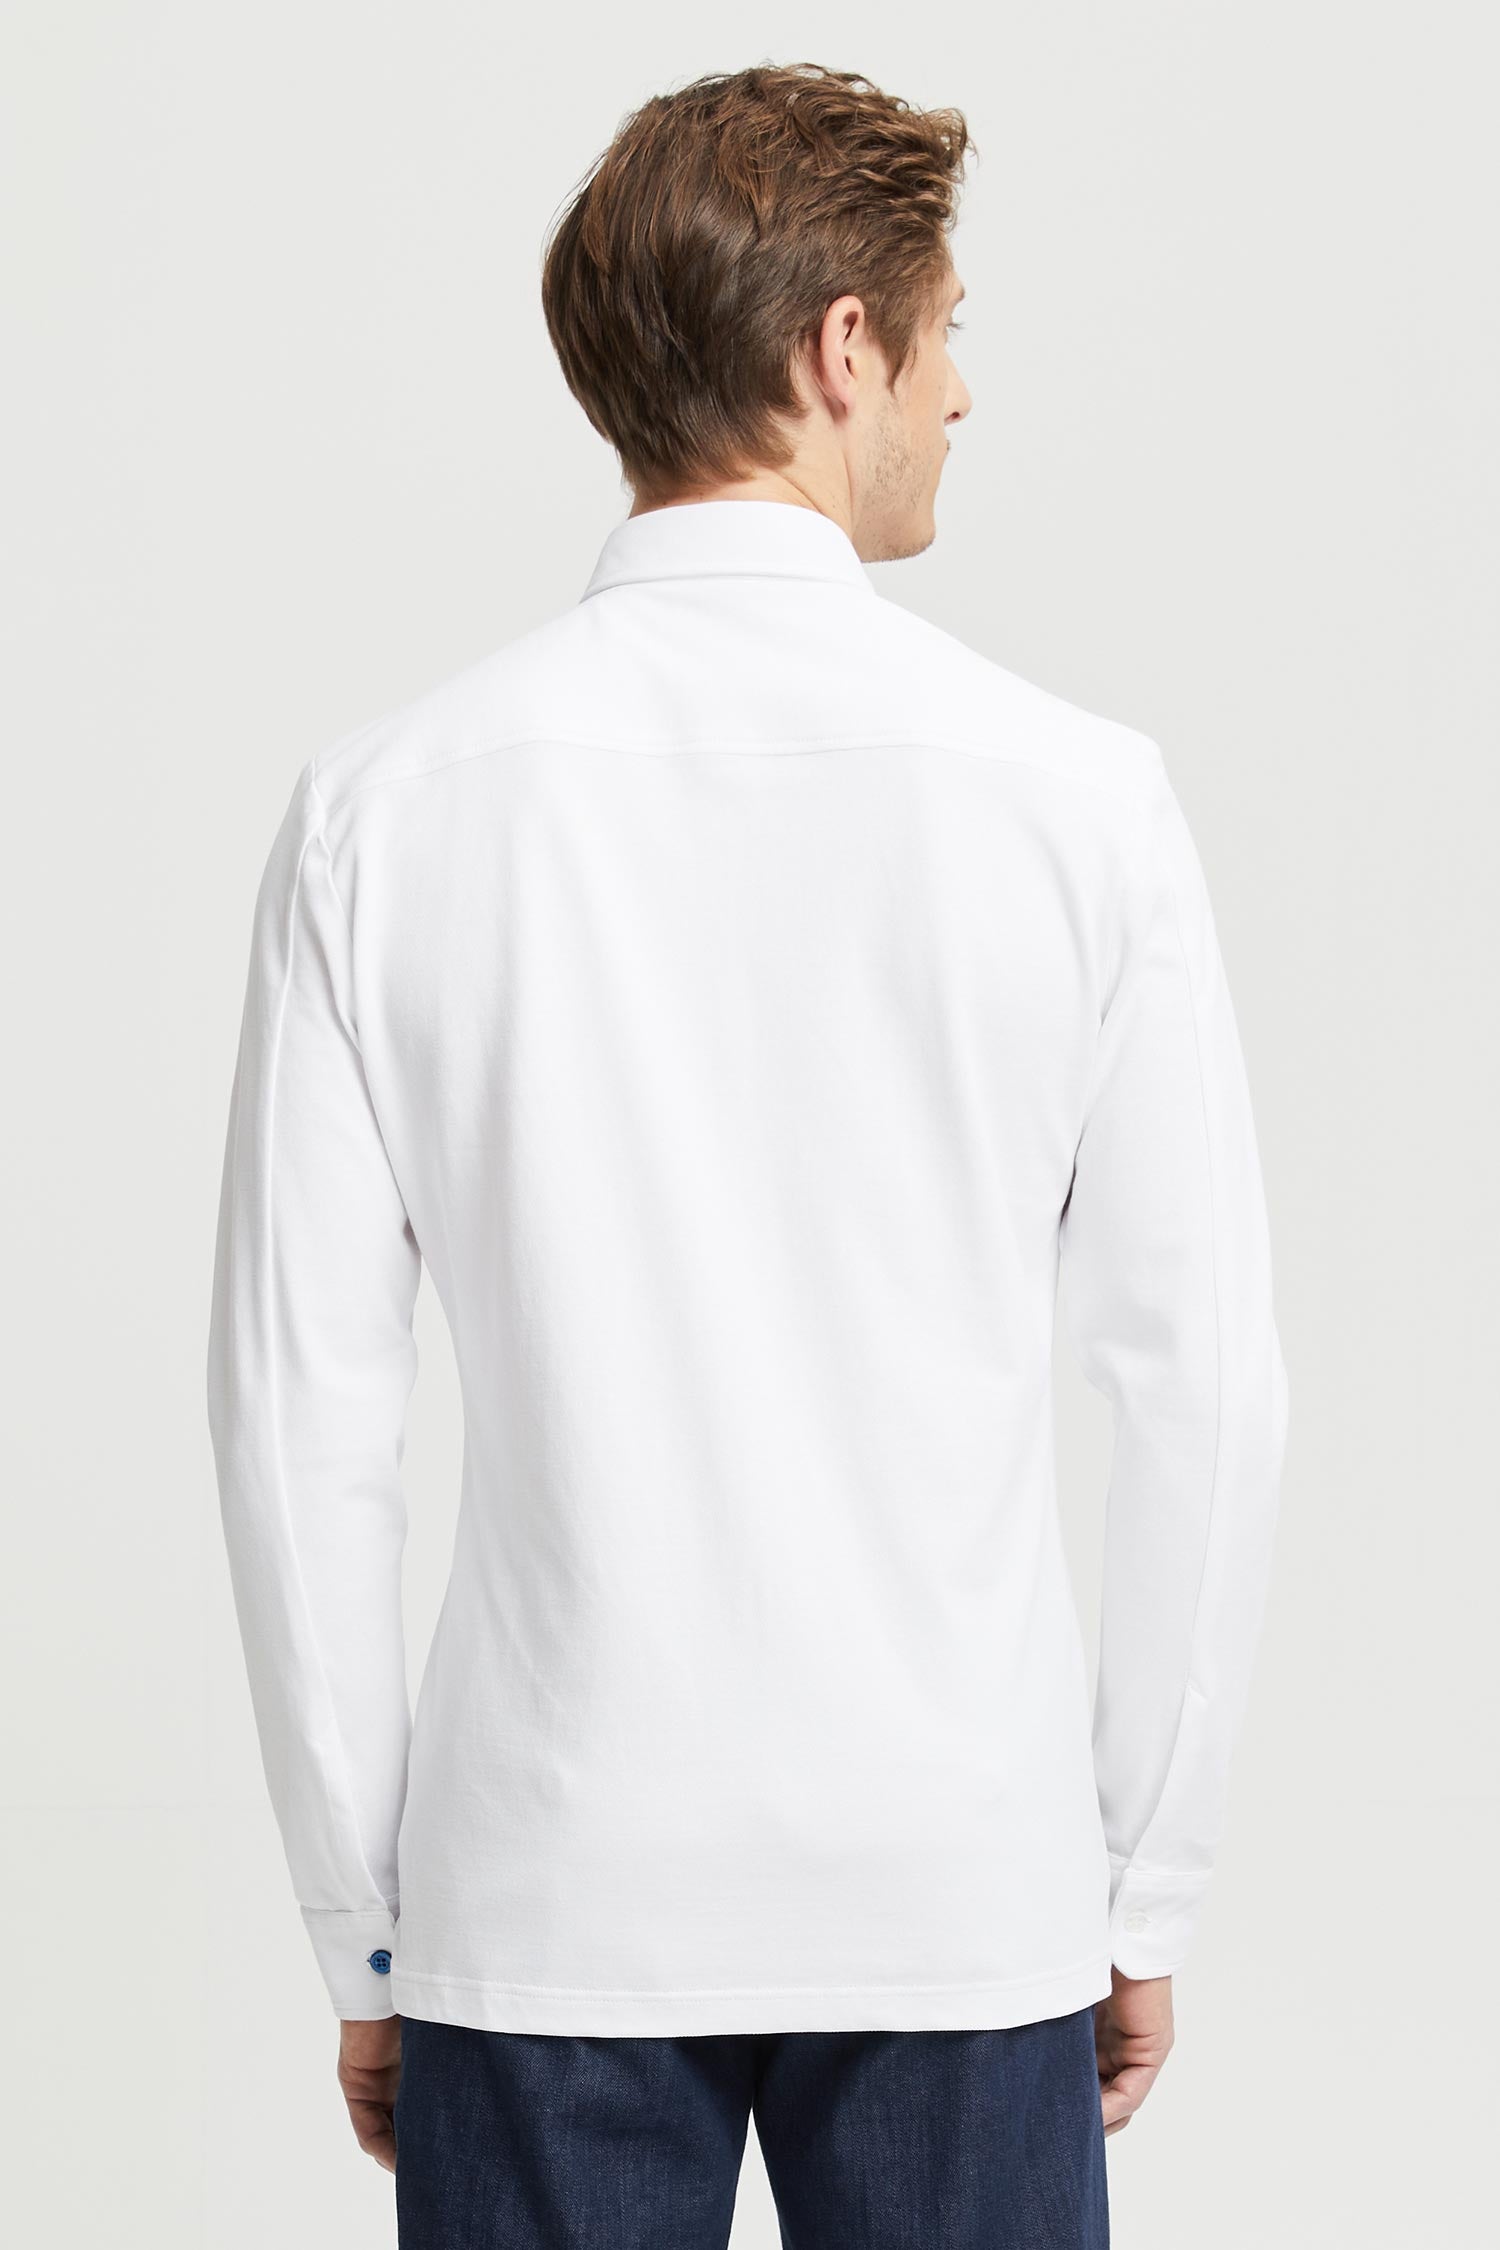 Frenn Hemmo sustainable premium quality GOTS organic cotton pique jersey shirt white